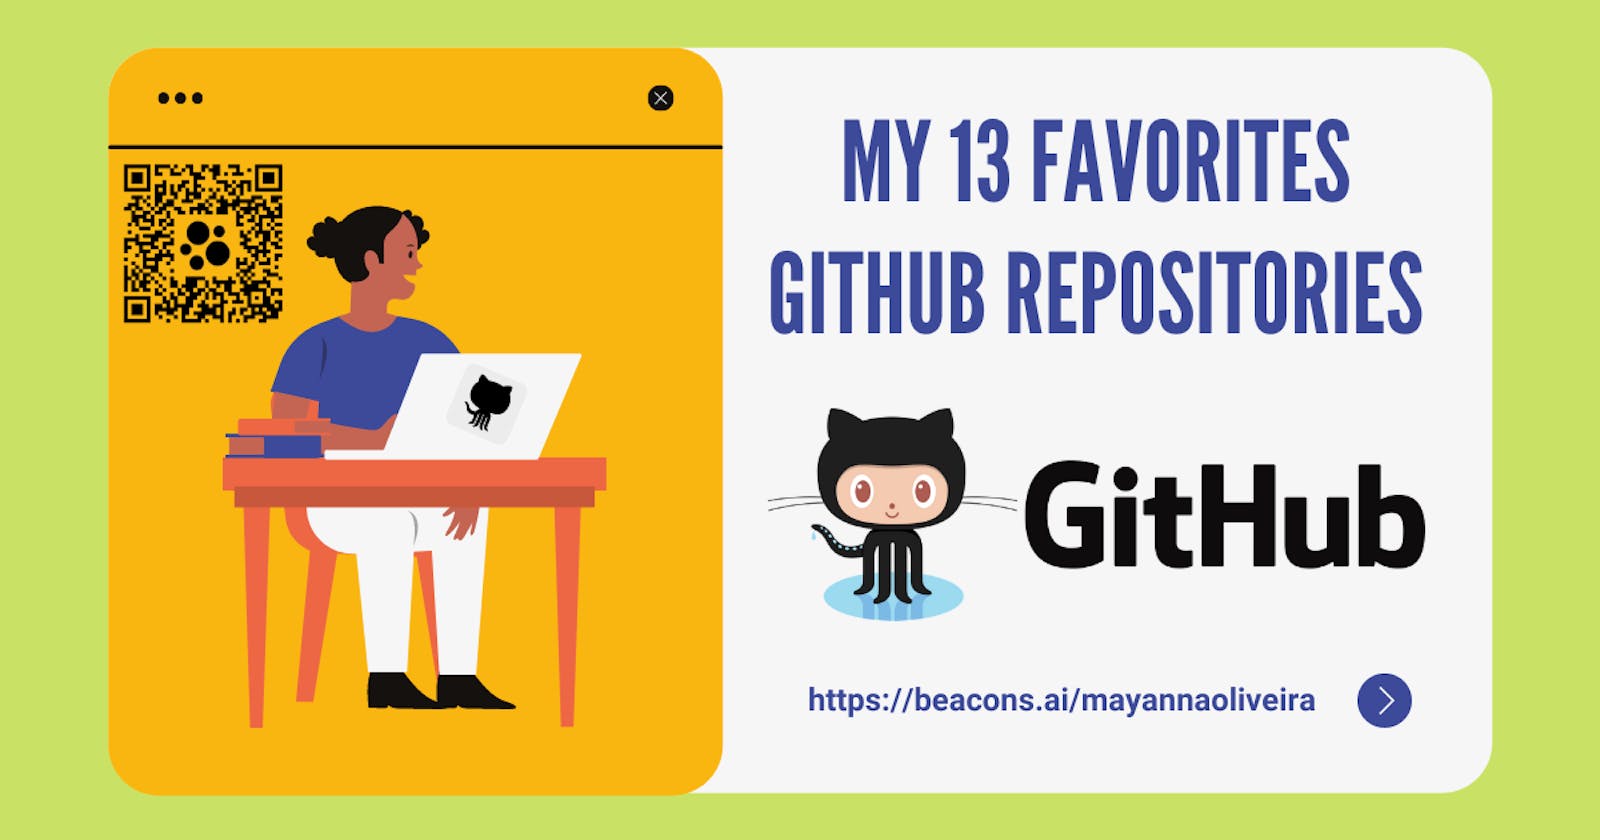 My 13 Favorites Github Repositories